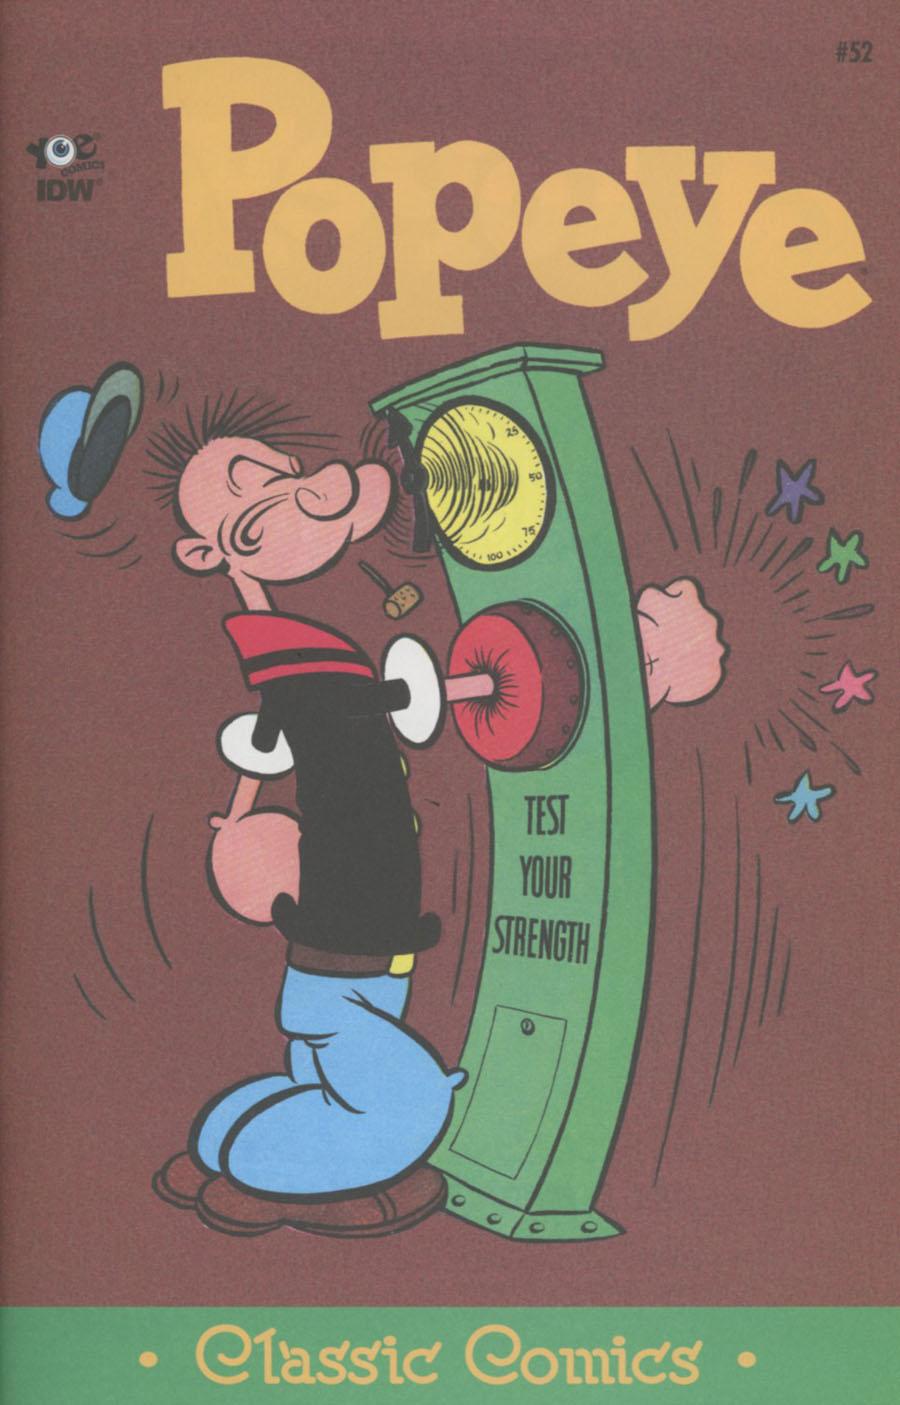 Classic Popeye Vol. 1 #52